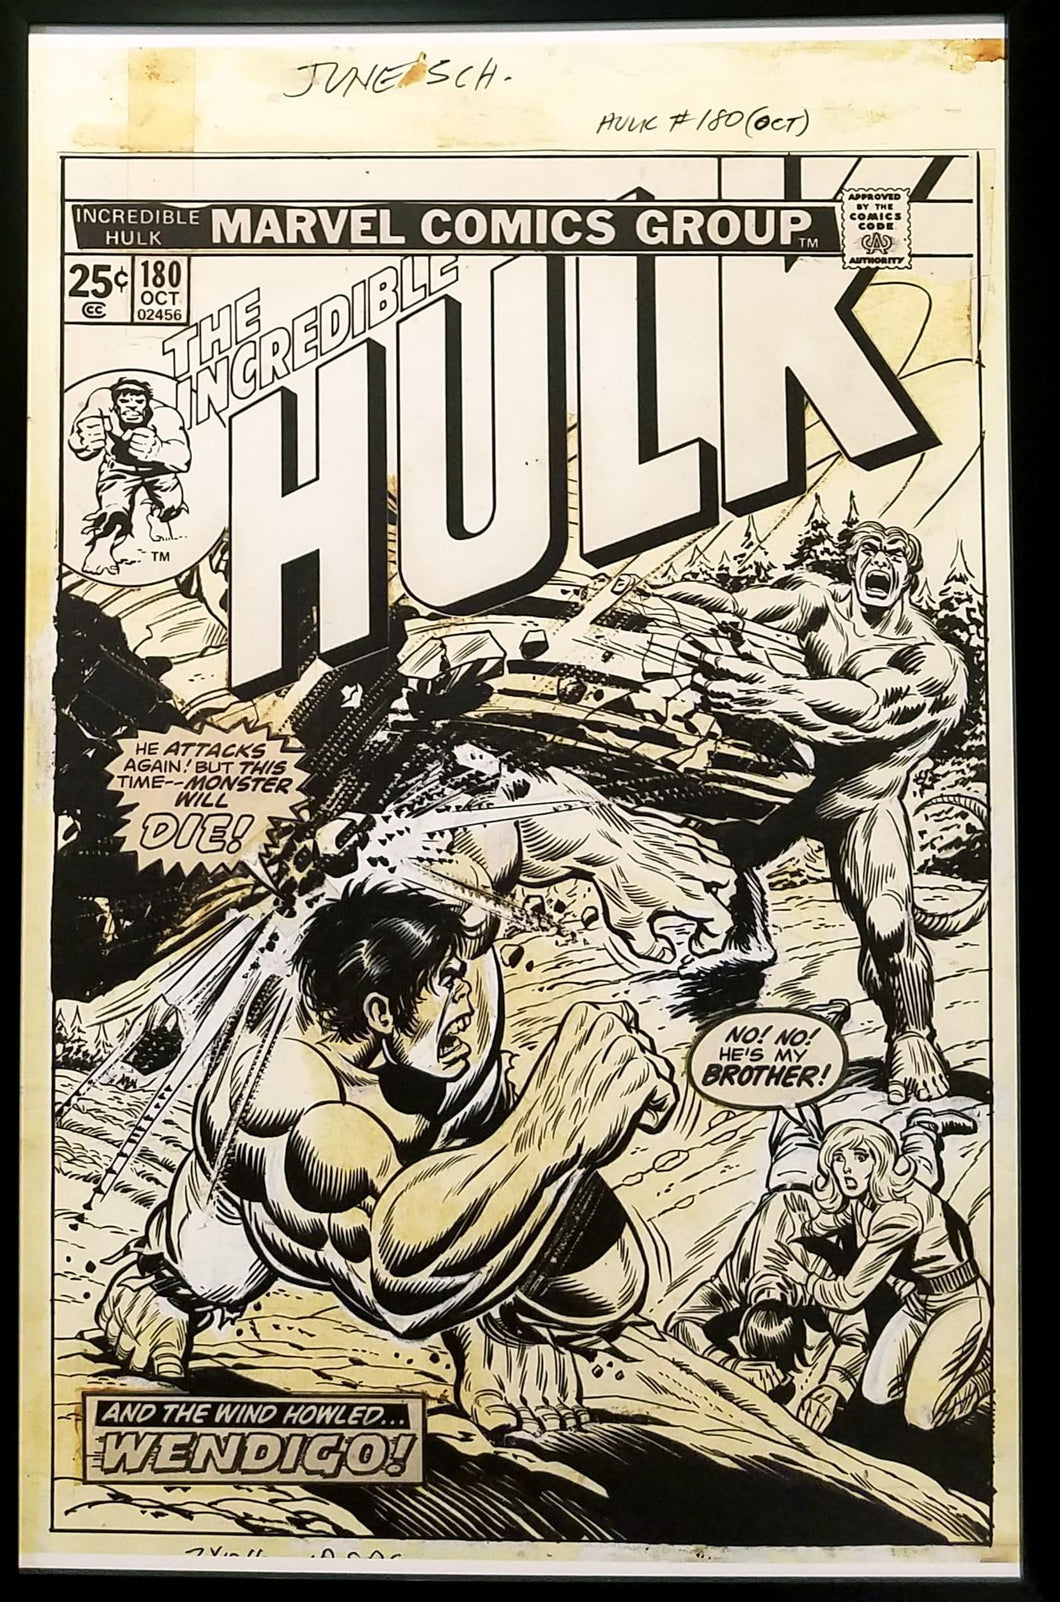 Incredible Hulk #180 by Herb Trimpe 11x17 FRAMED Original Art Poster Marvel Comics